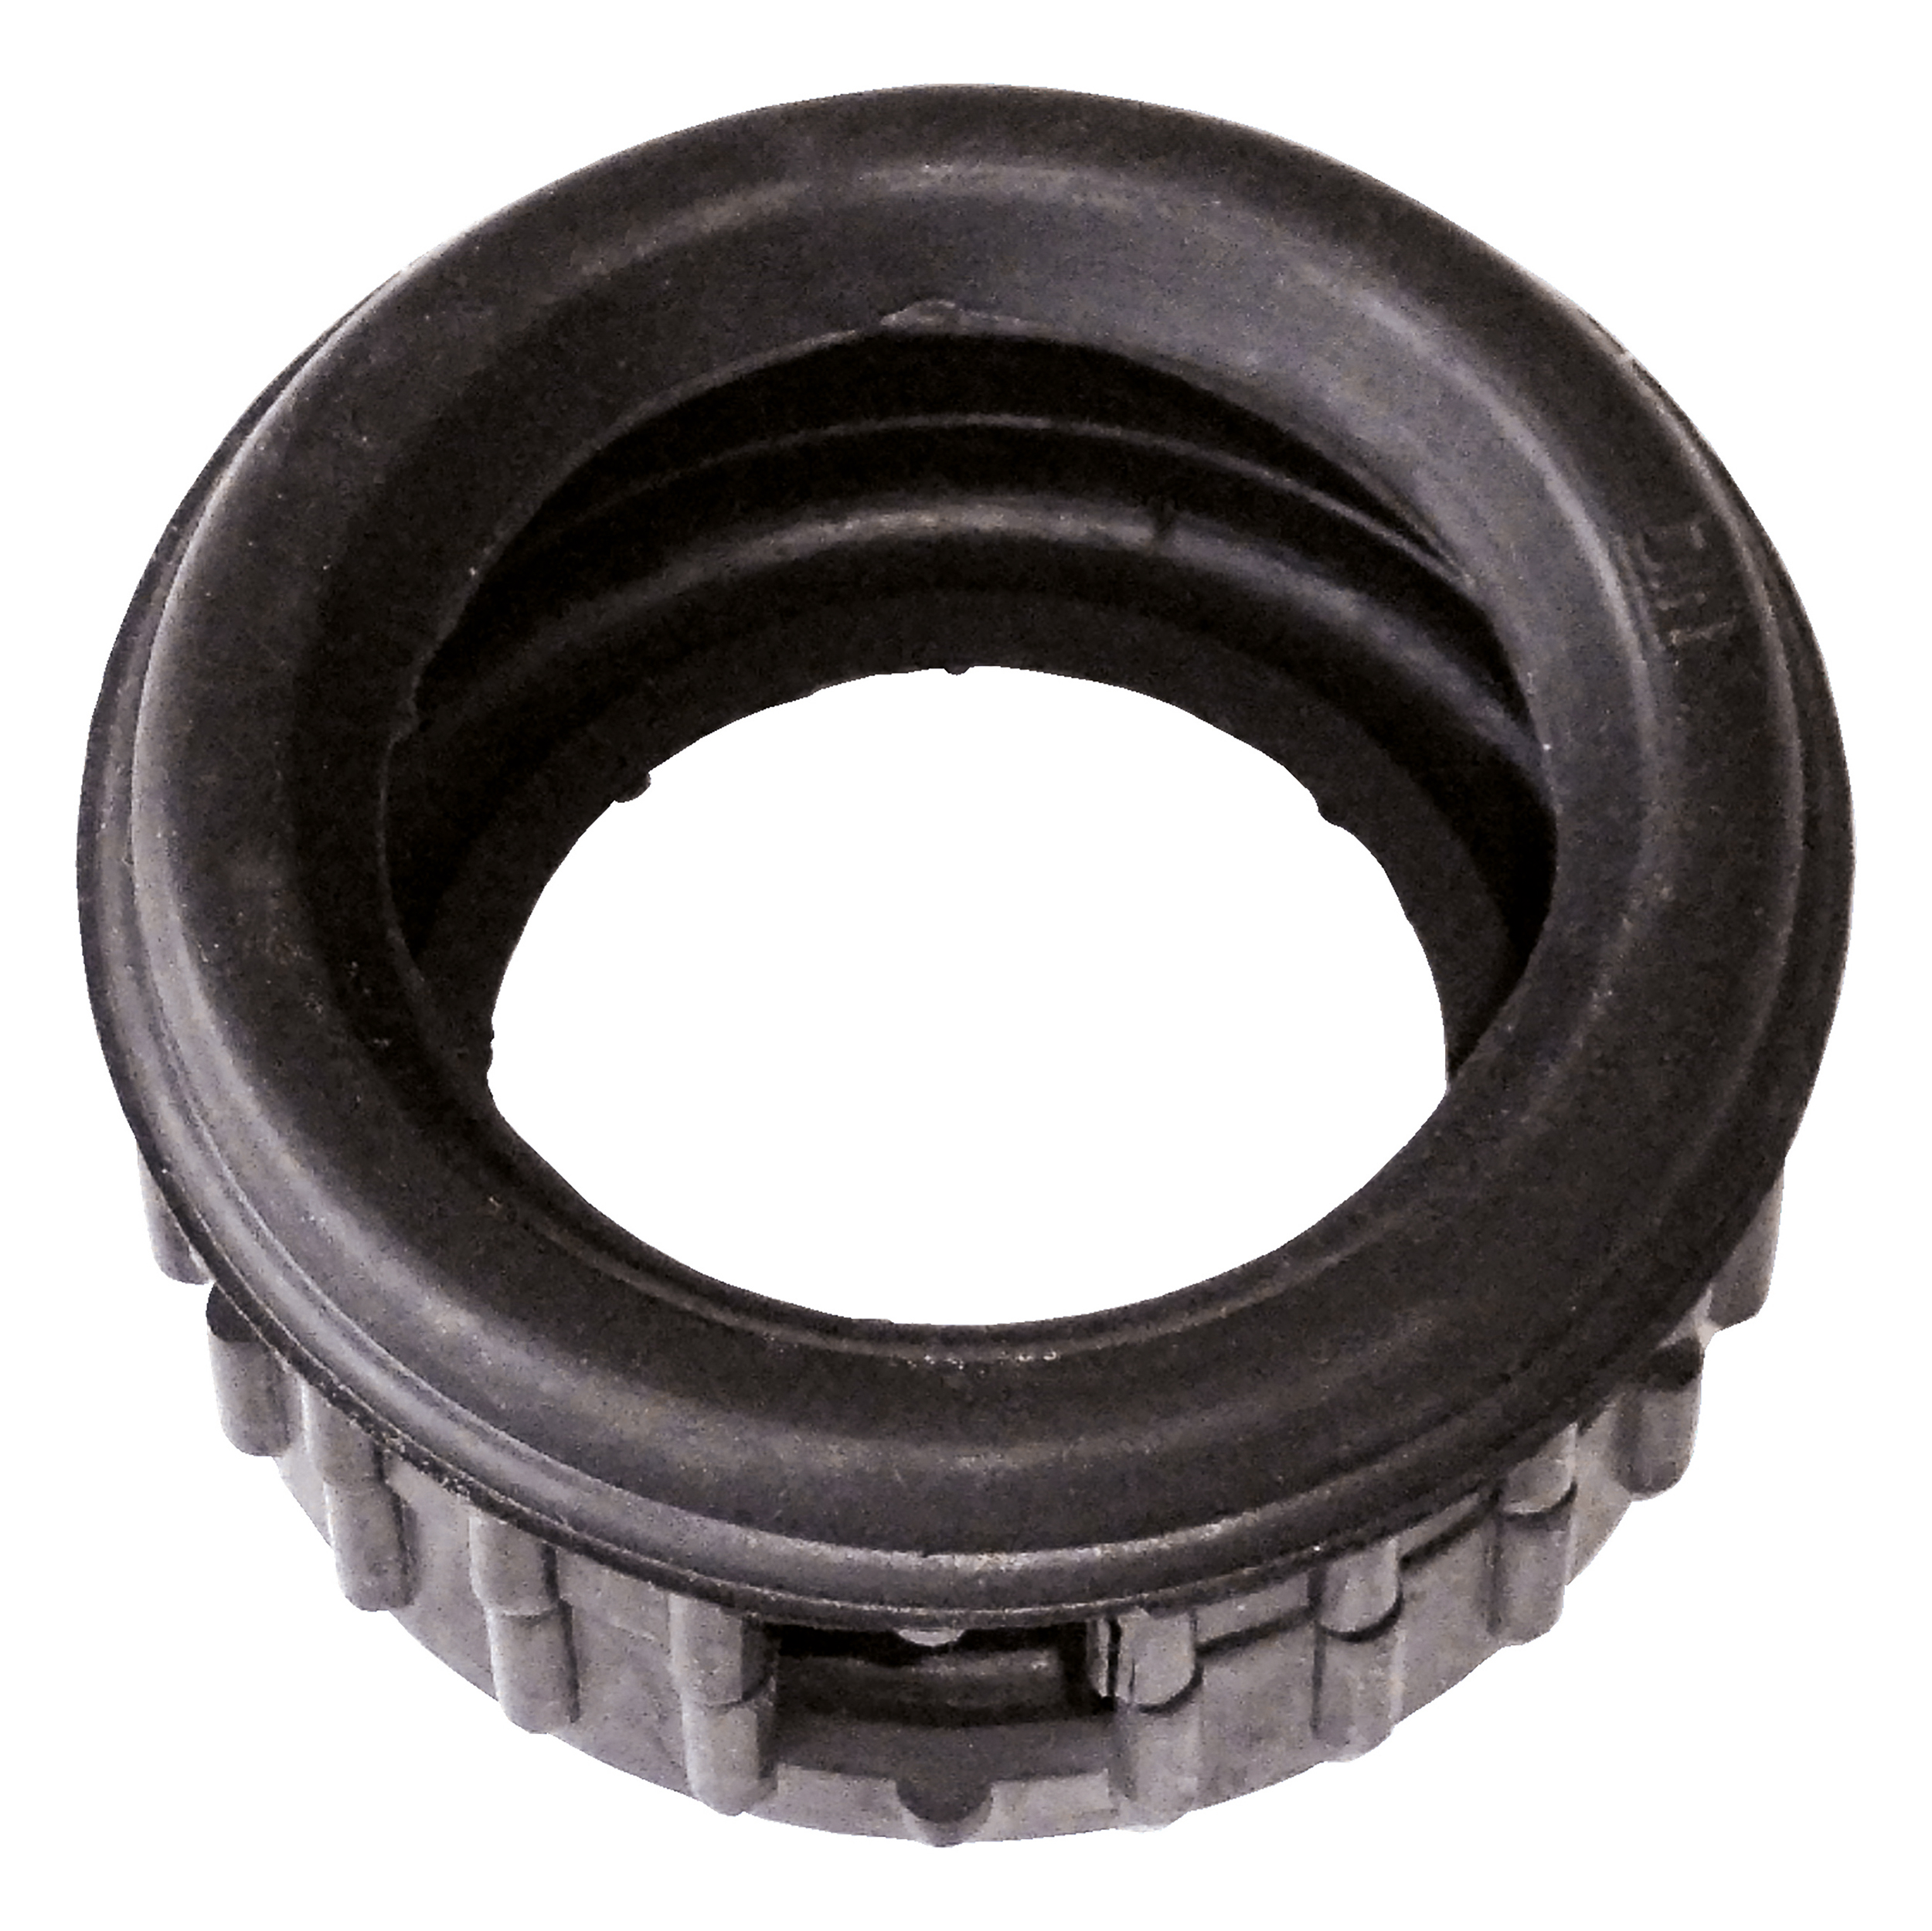 Rubber Protection Cap, Ø 63mm, Black Colored